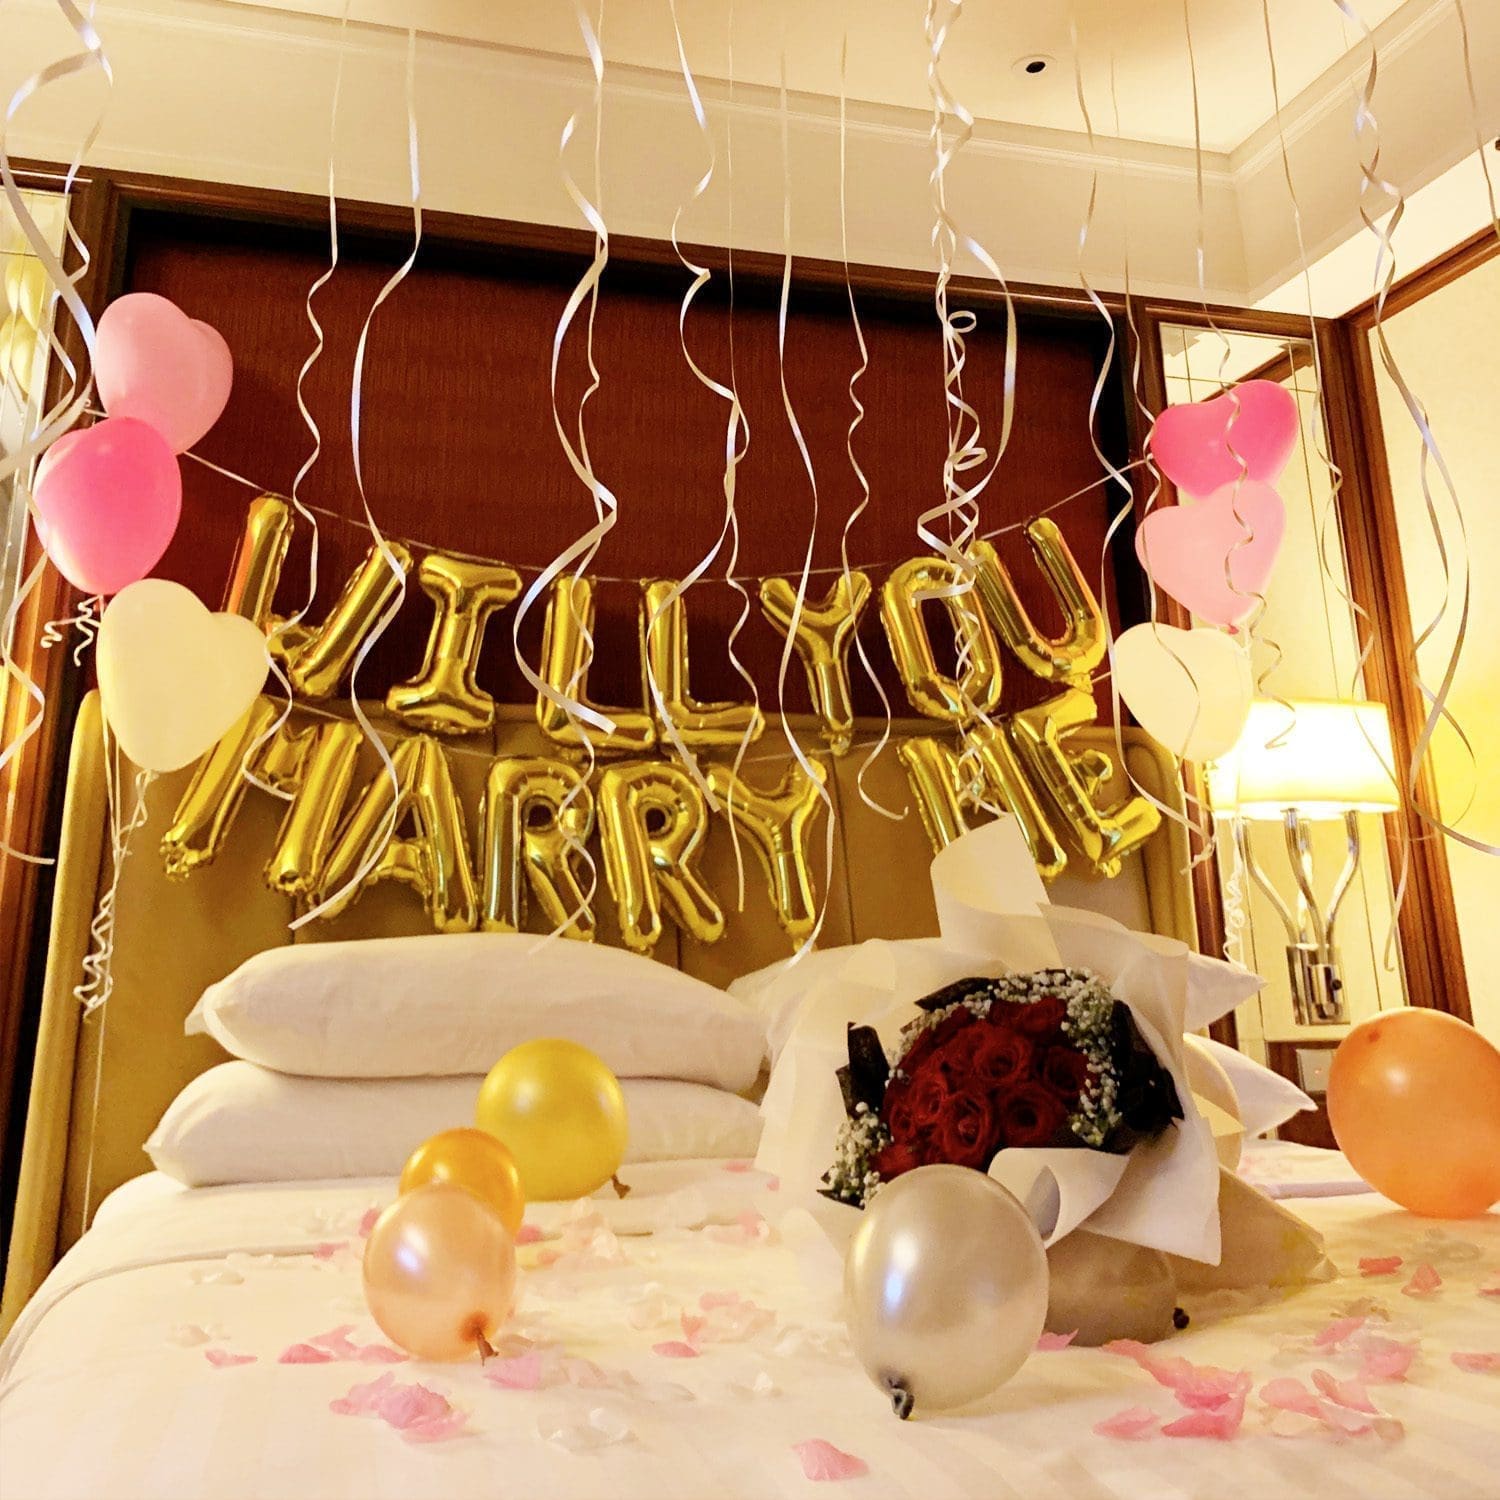 Surprise Proposal Hotel Room Decoration